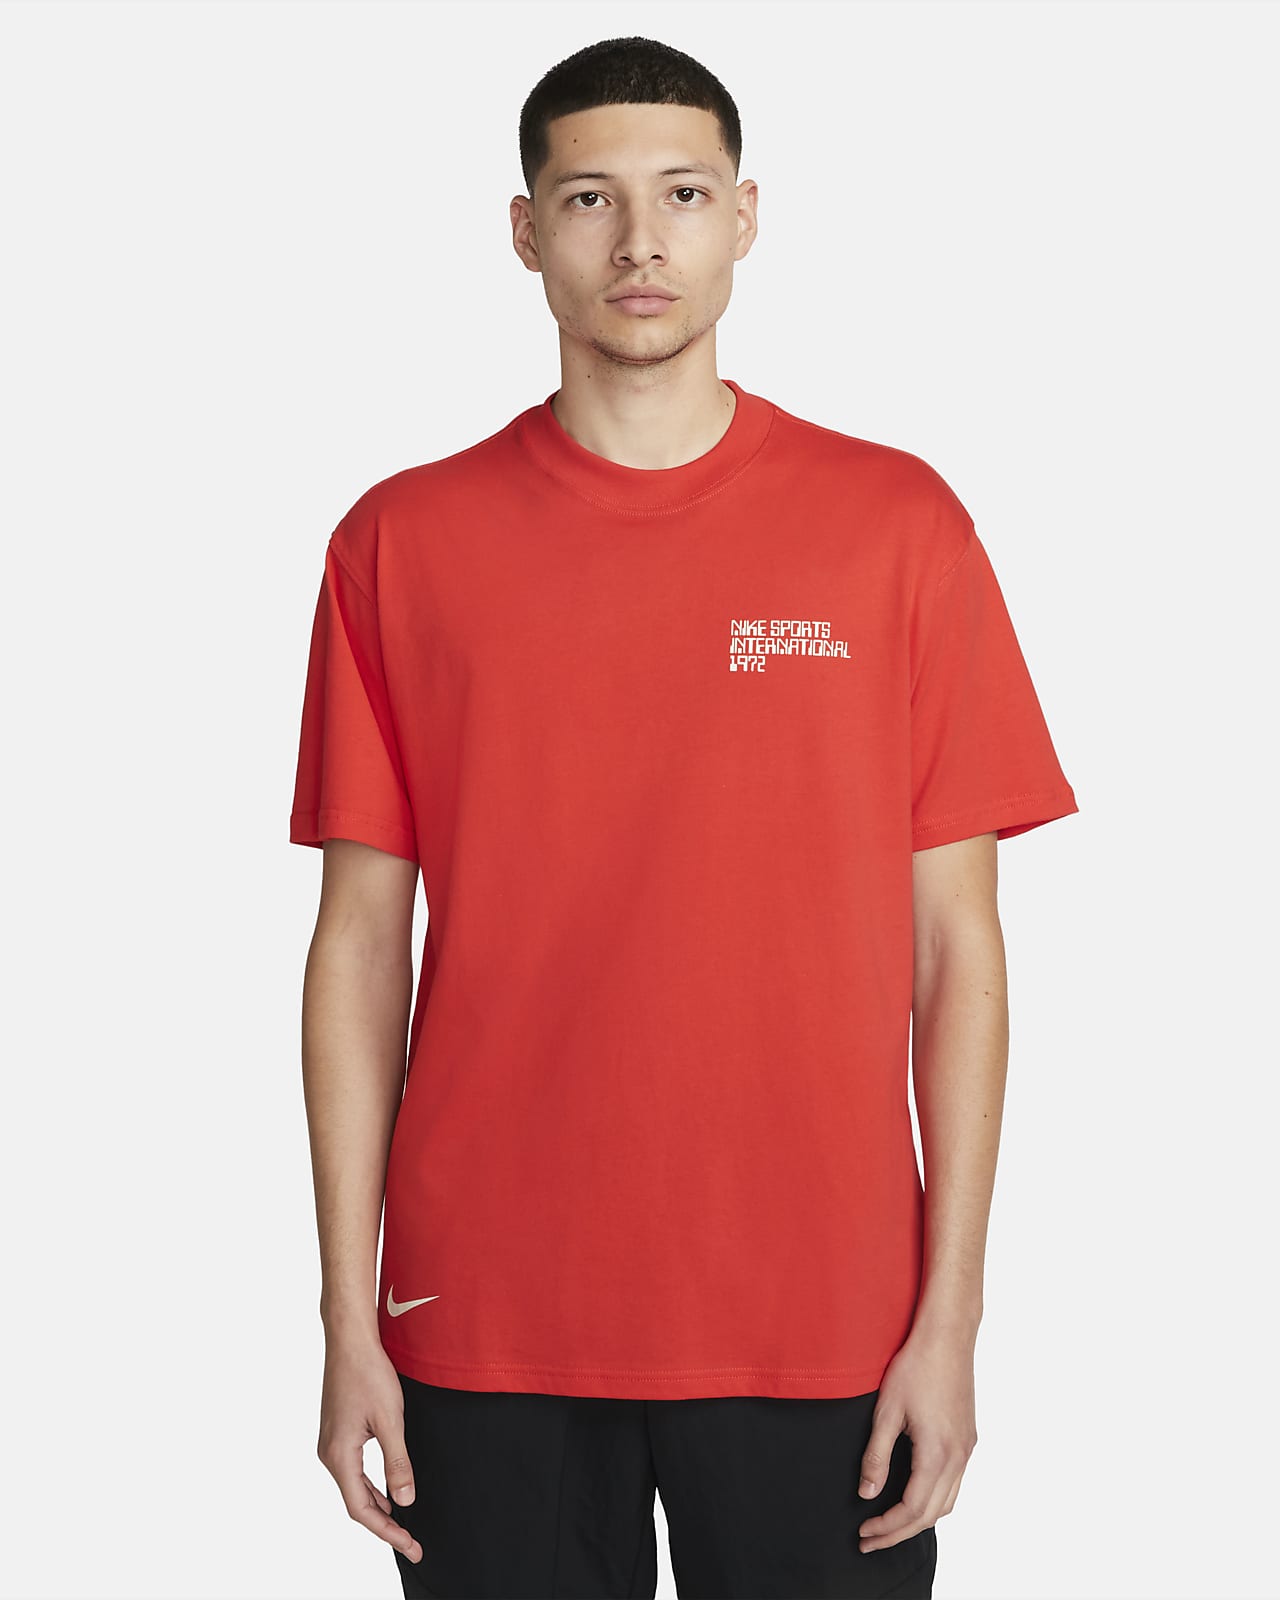 Nike Sportswear Circa Herren-T-Shirt mit Grafik